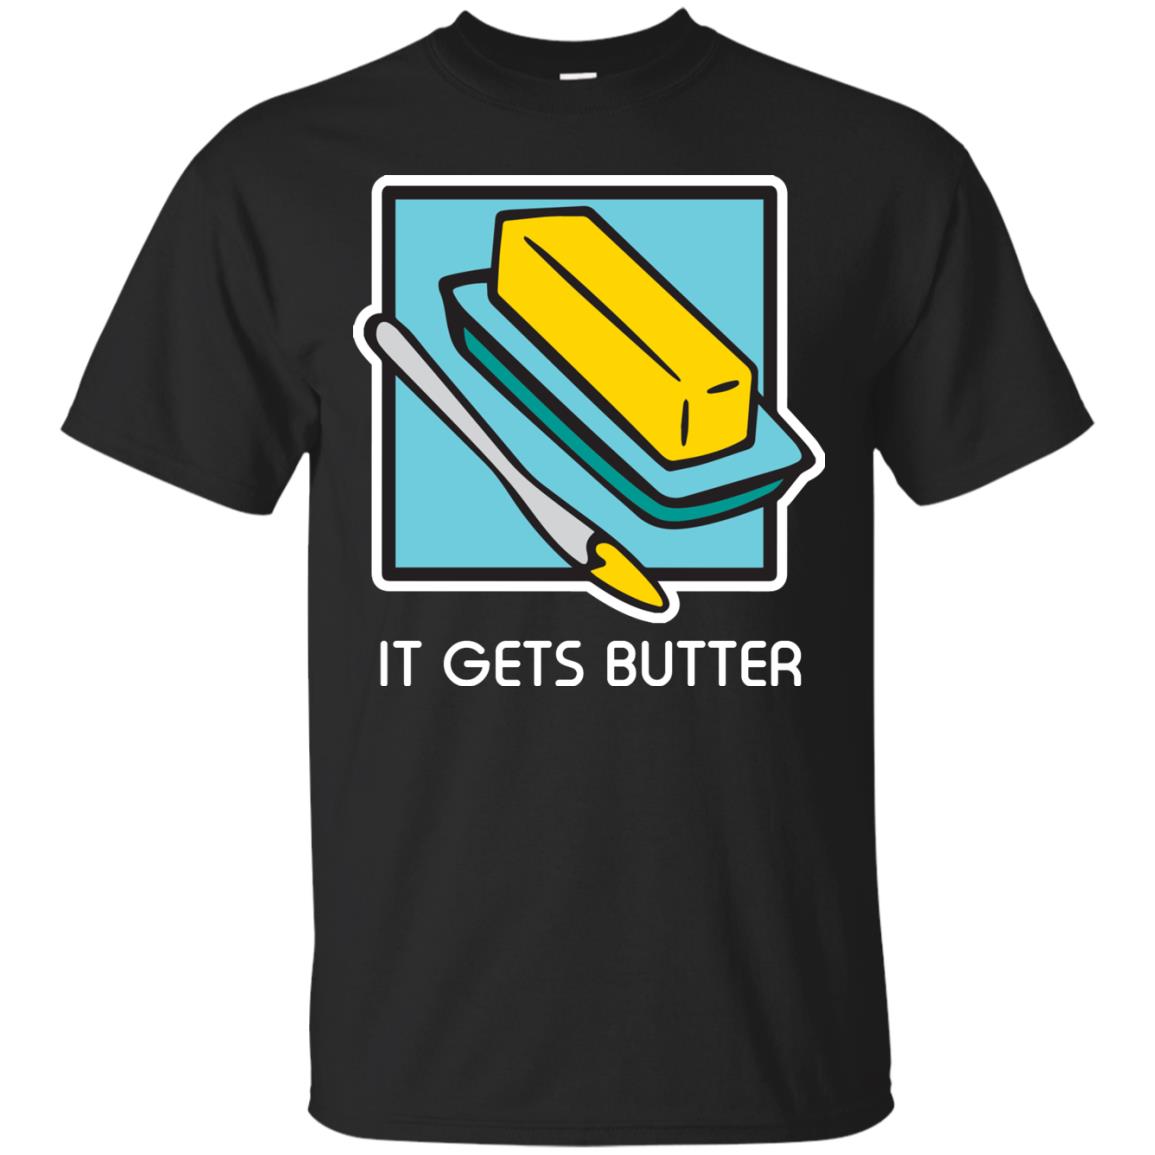 It Gets Butter Gift Shirt For Butter Lover